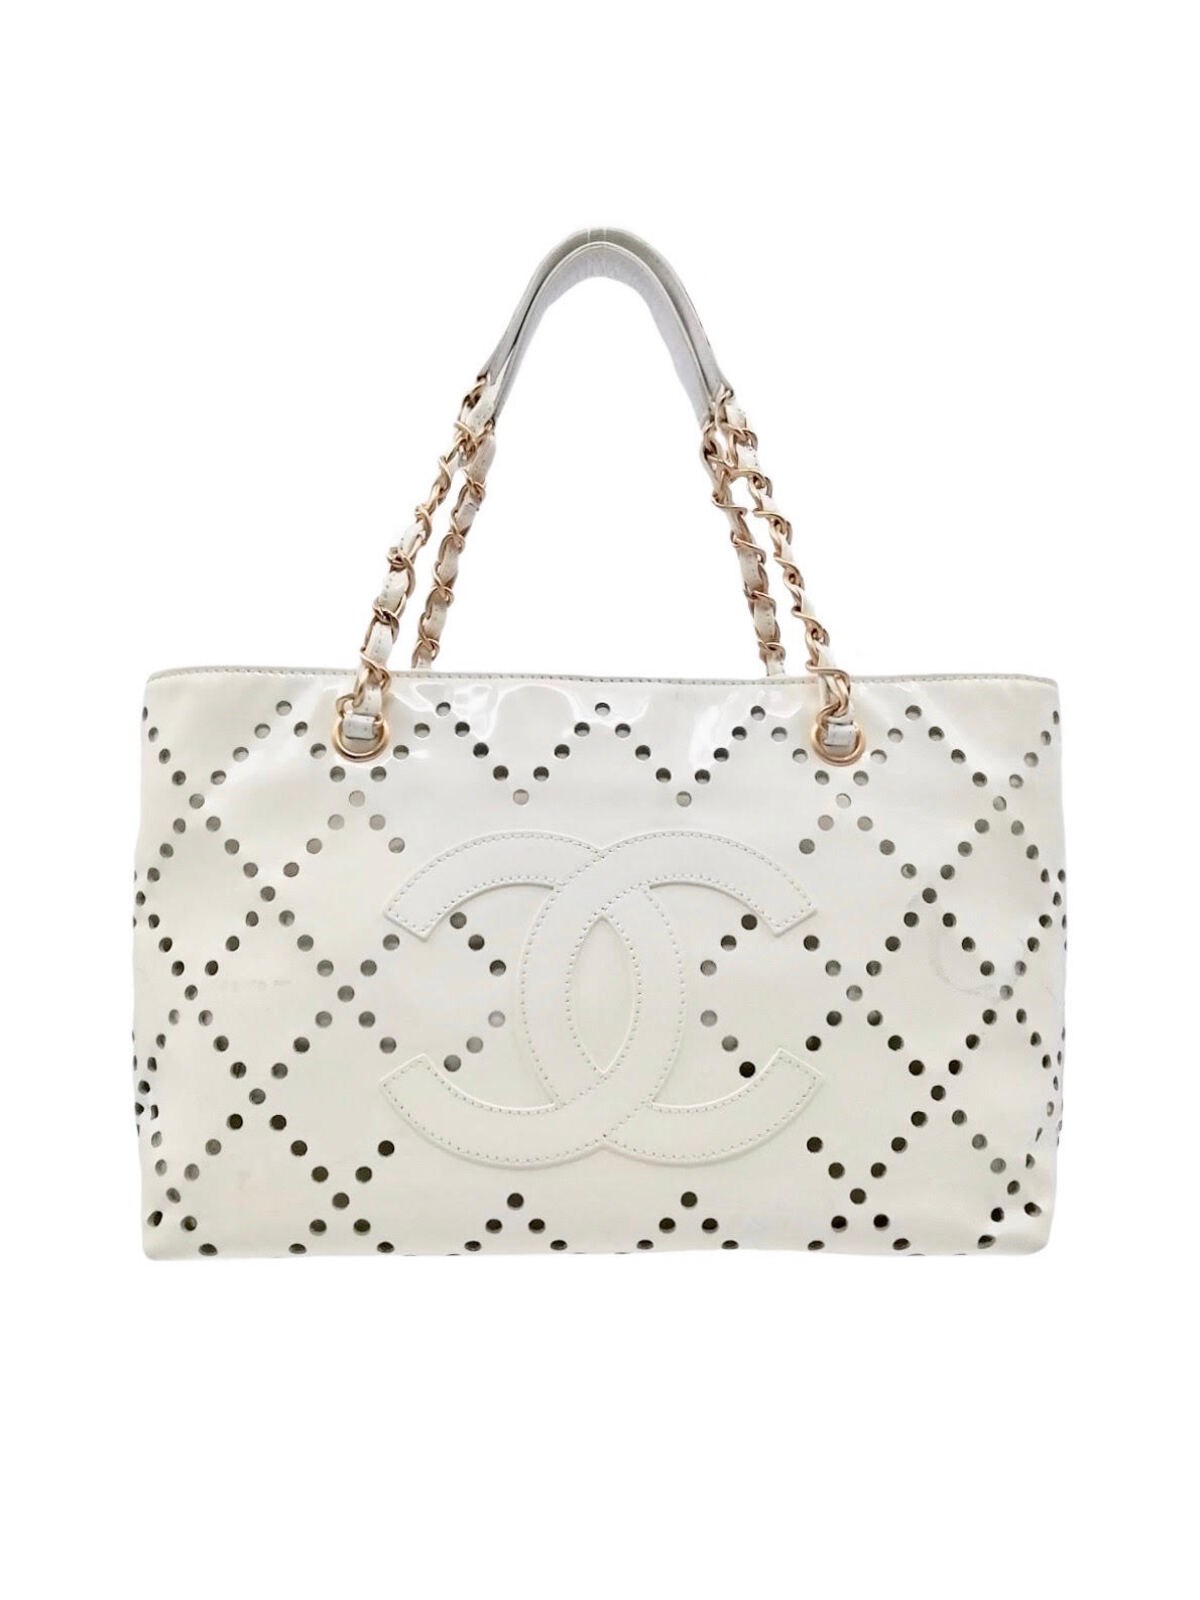 White Grand Shopping bag. (Chanel )